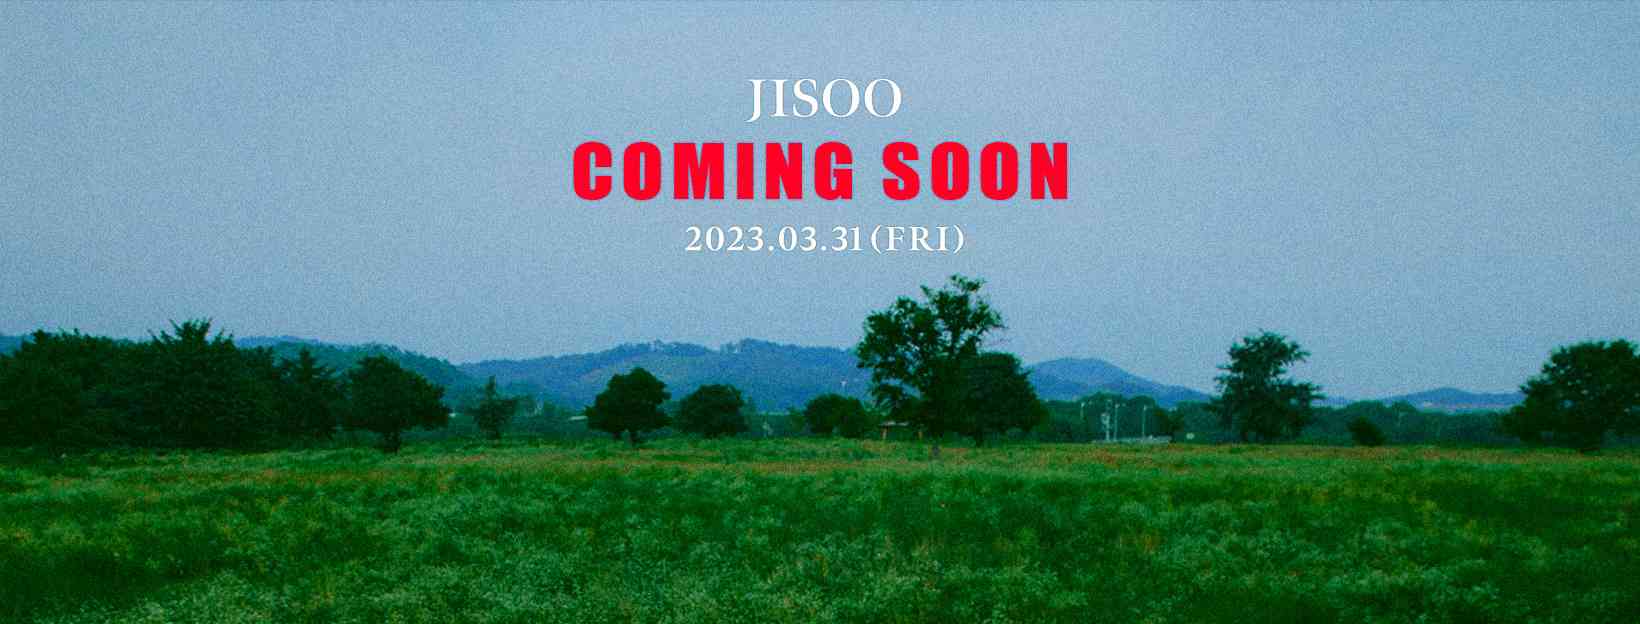 BLACKPINK's Jisoo teases first solo album